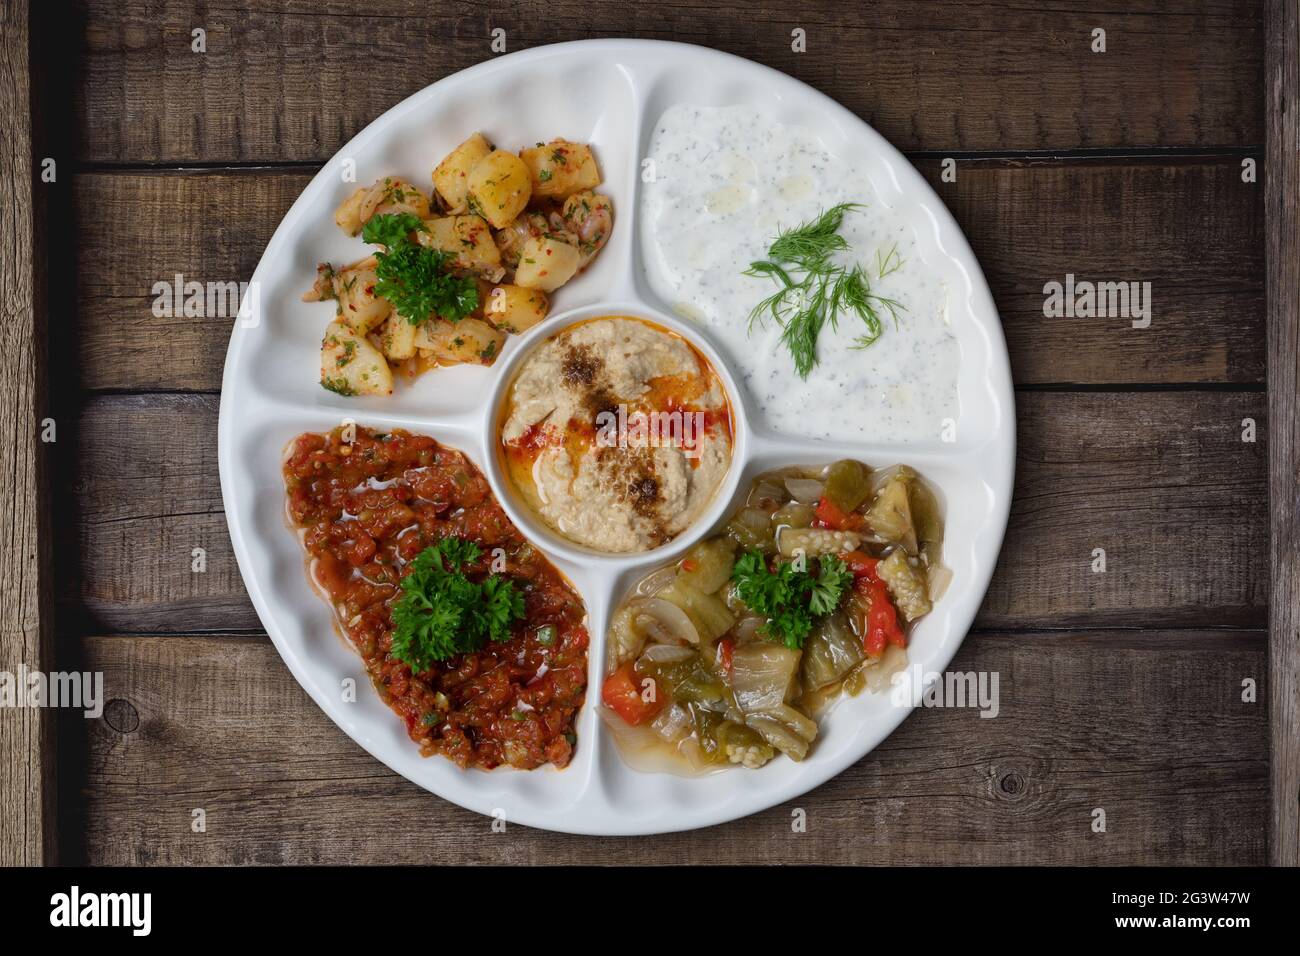 Entrantes vegetarianos fotografías e imágenes de alta resolución - Alamy